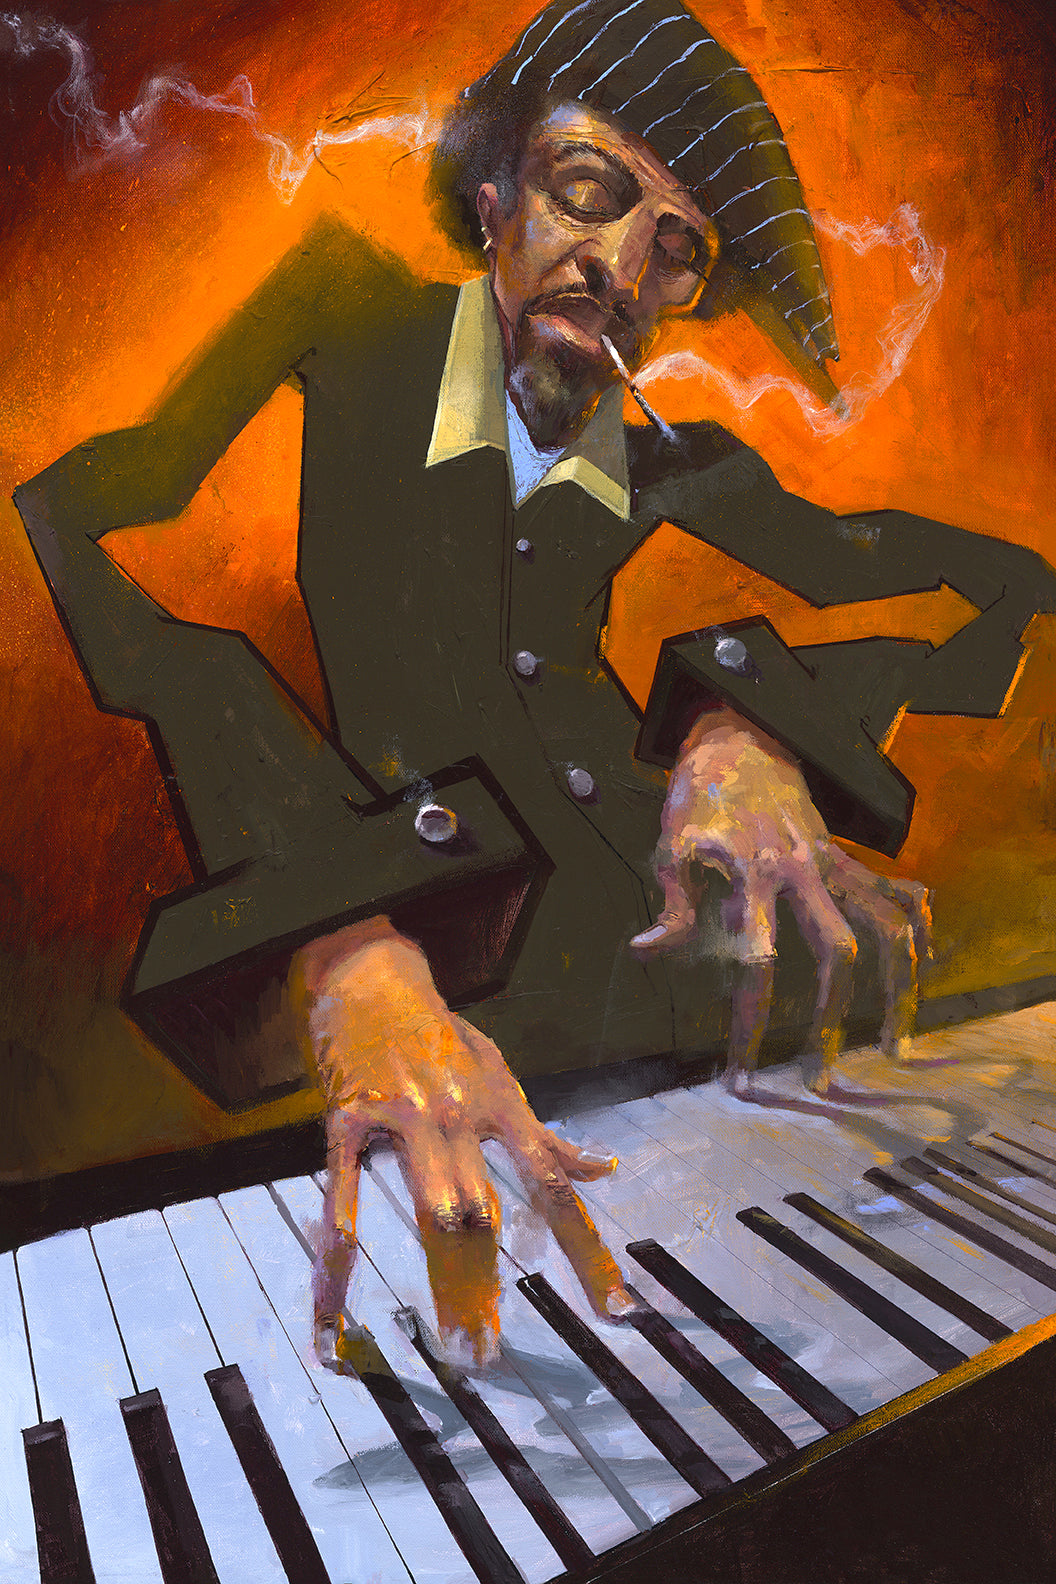 Jazz Piano Art Print by urban artist Justin BUA